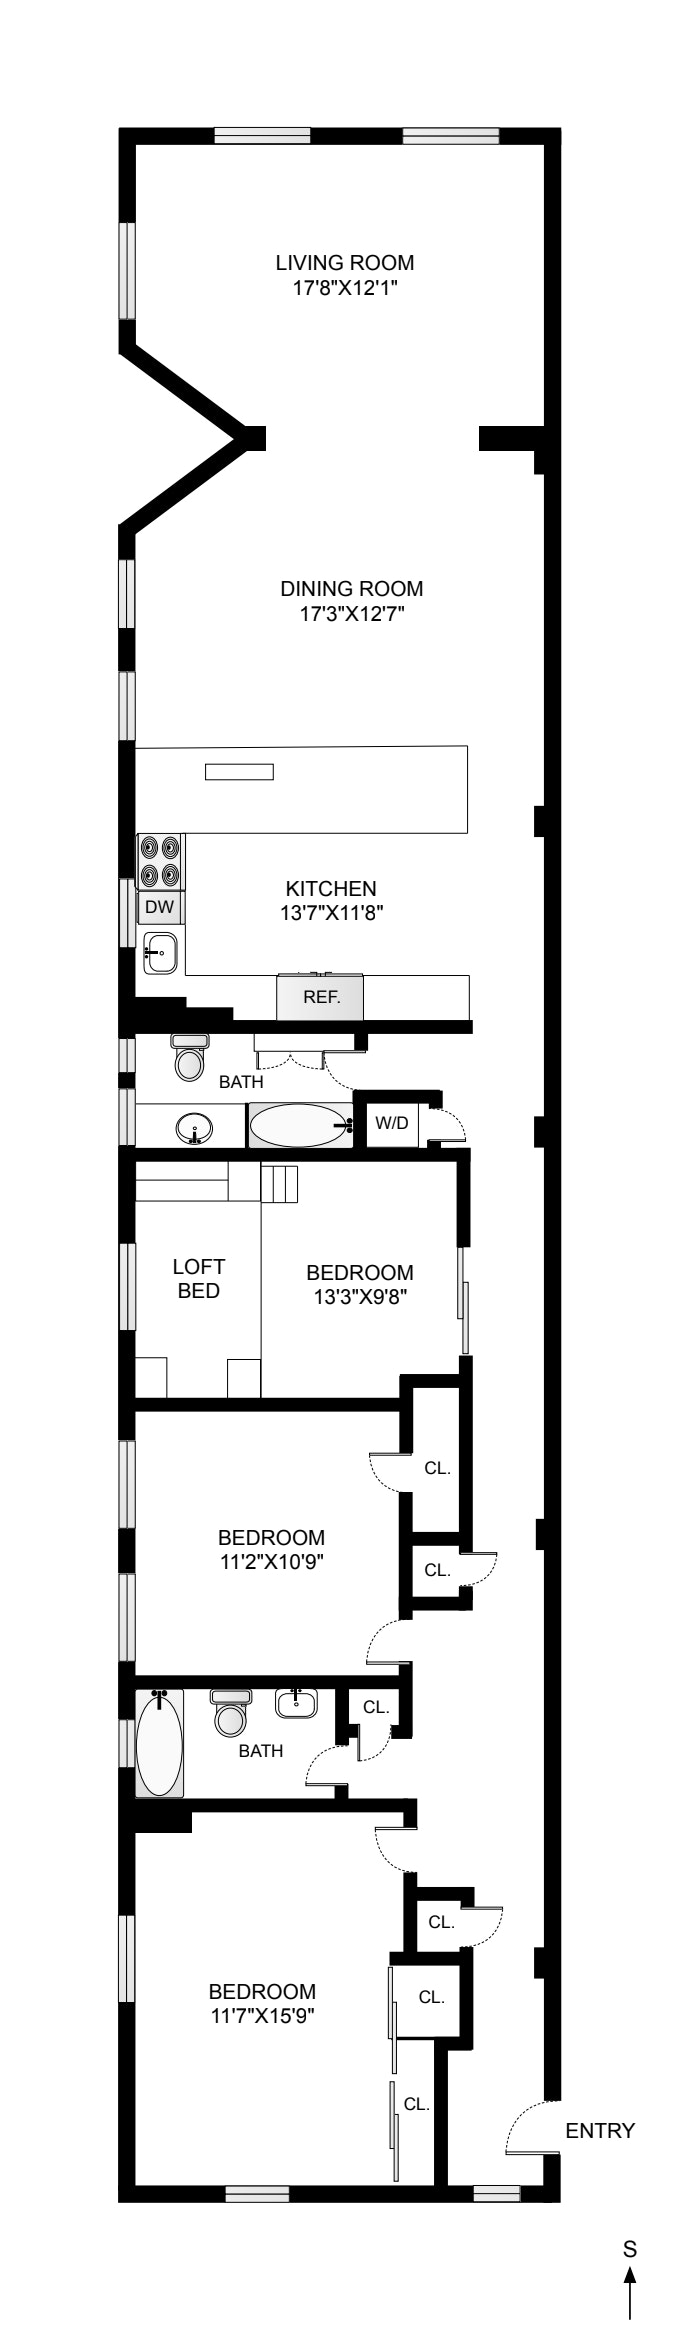 Floorplan for 275 Clinton Avenue, 31